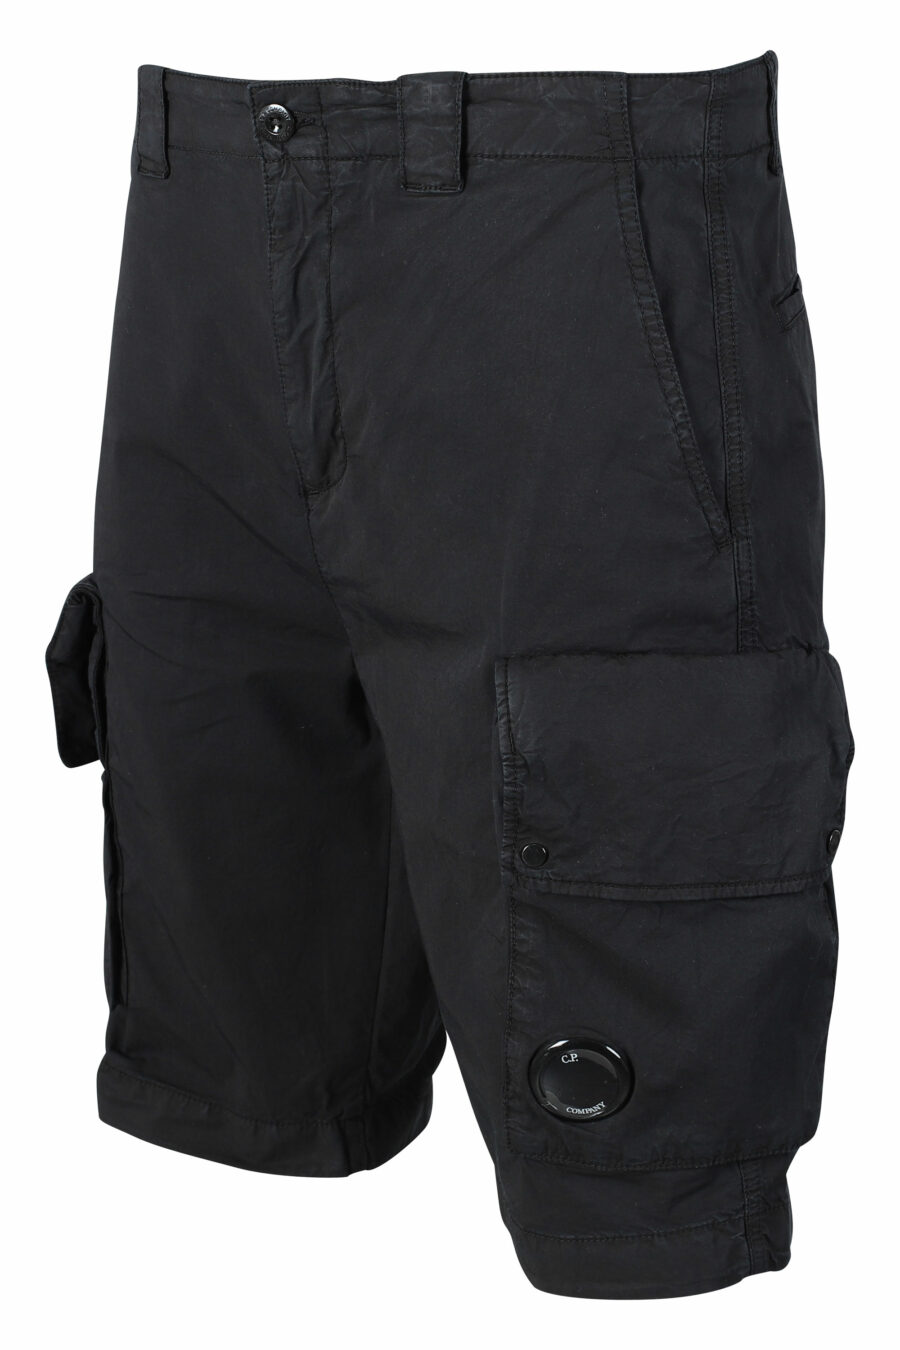 Black shorts with side pockets and circular mini logo - IMG 9483